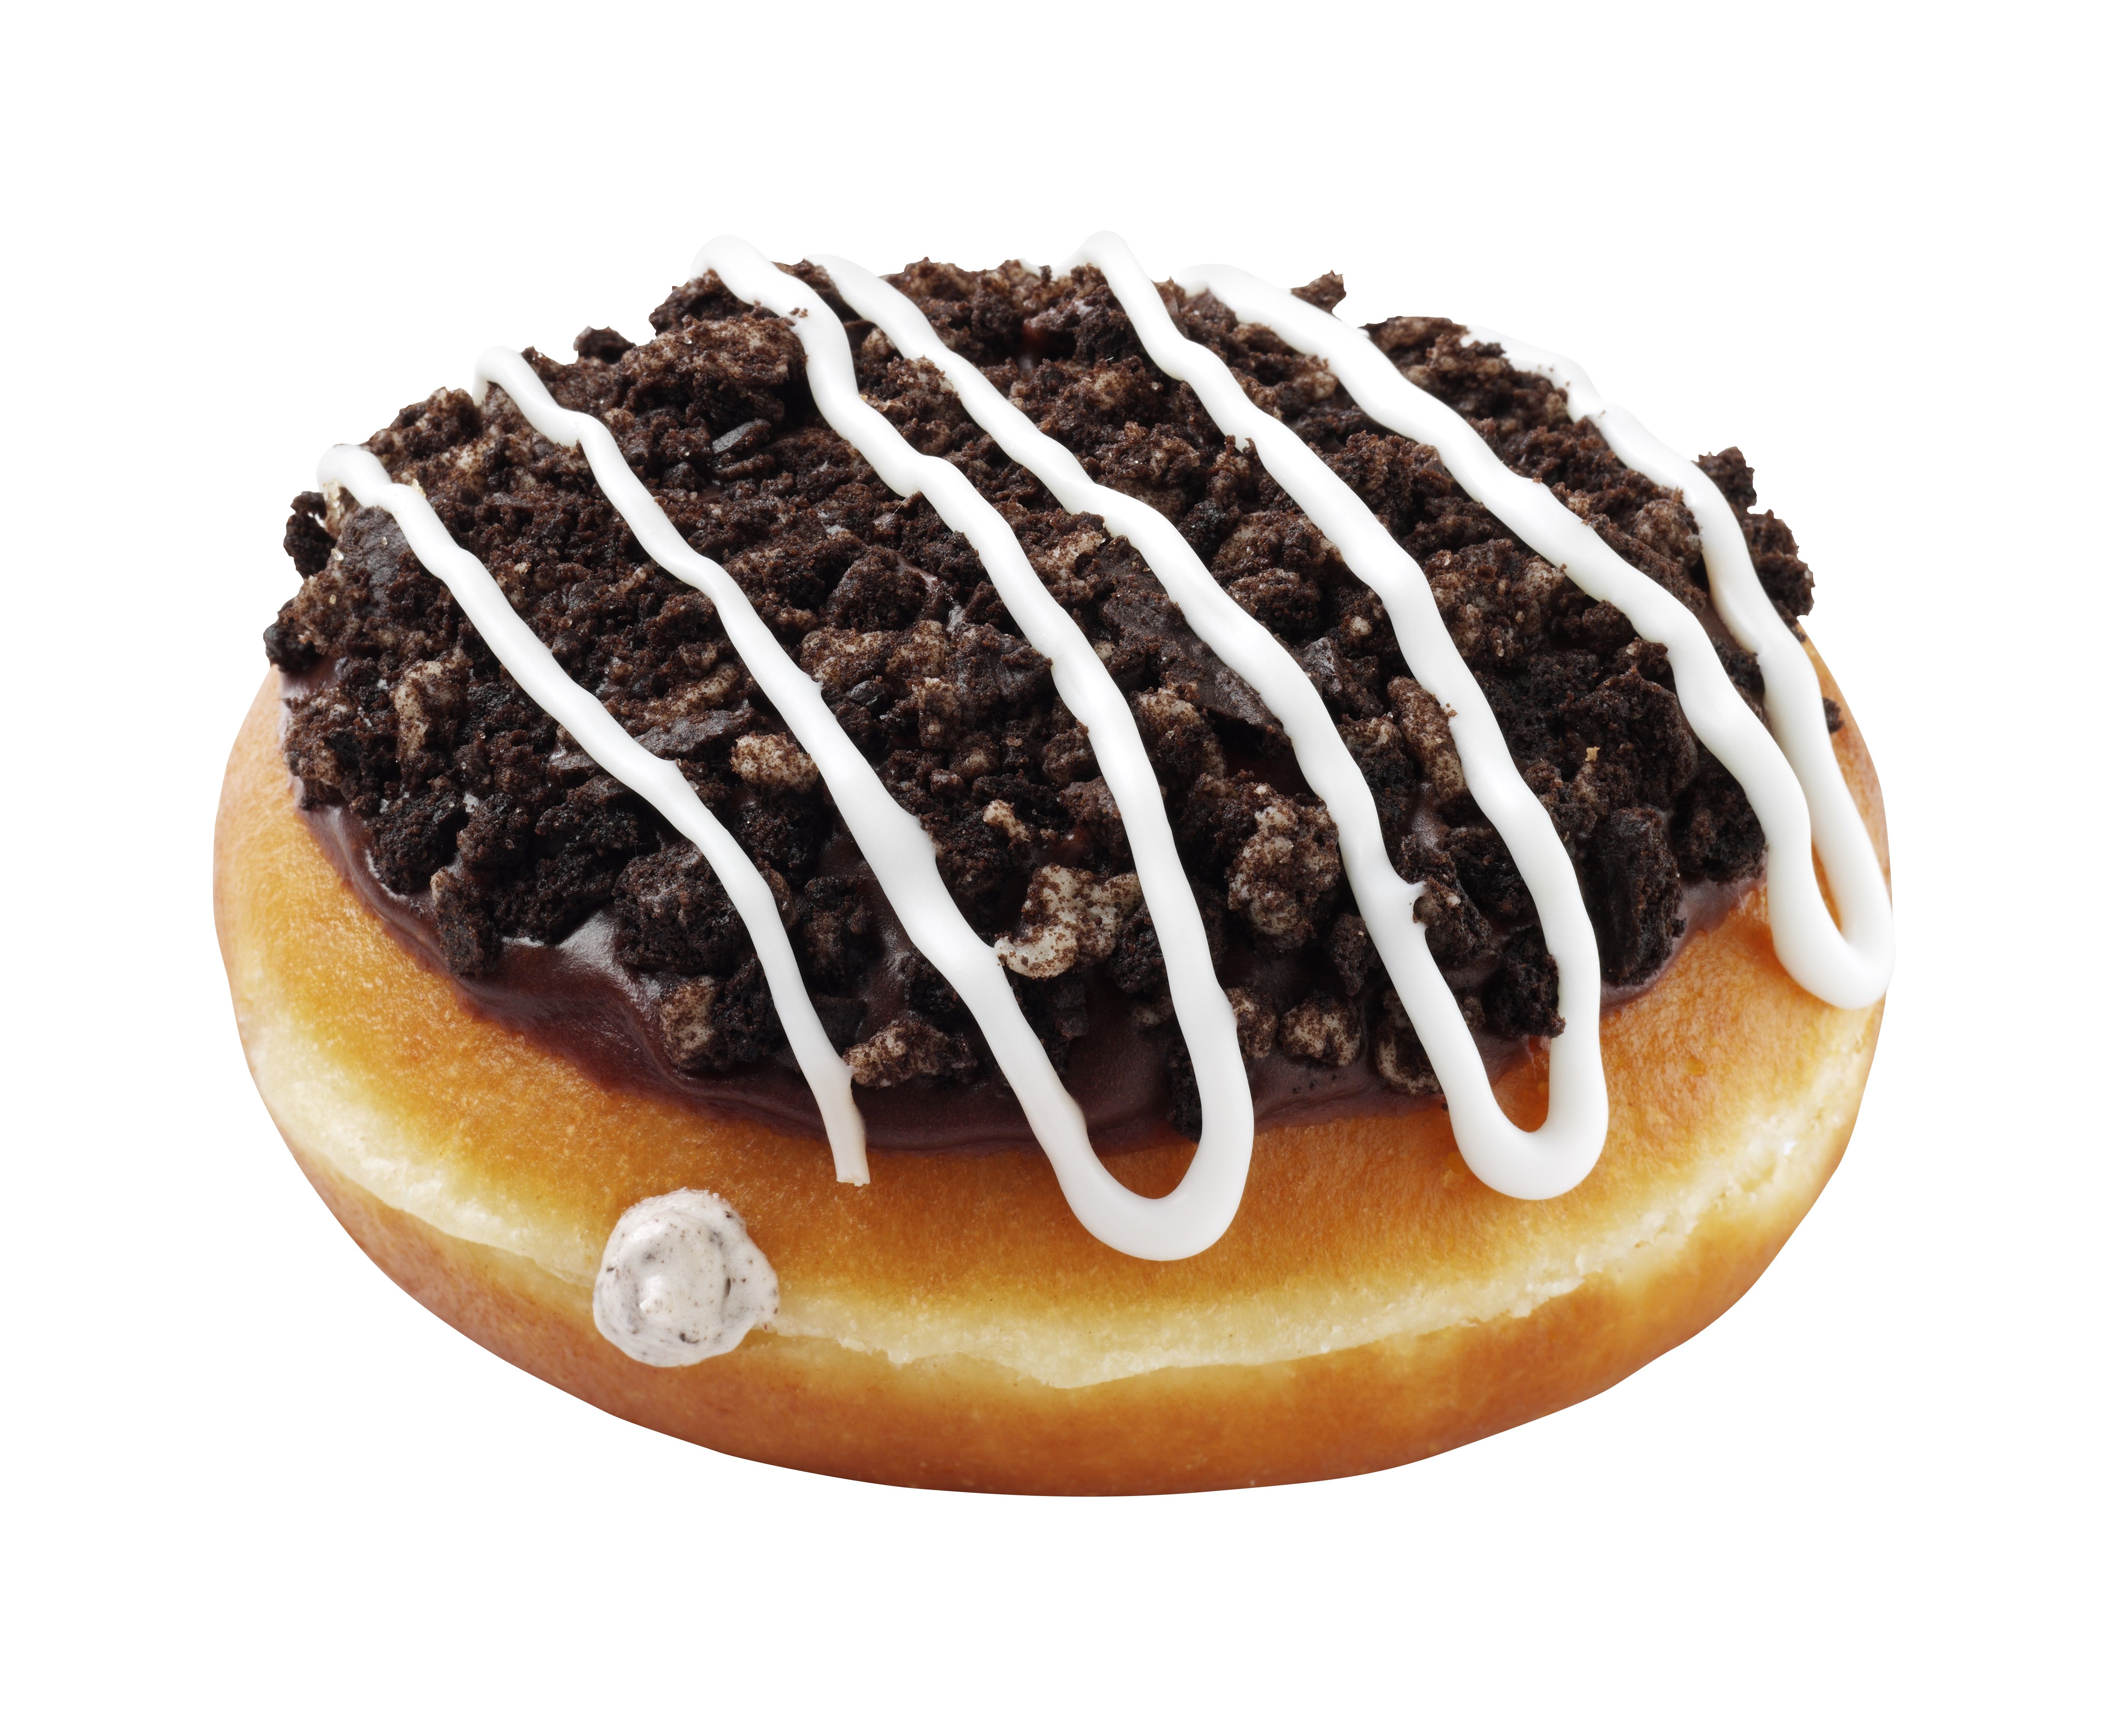 Hot News from Krispy Kreme Doughnuts